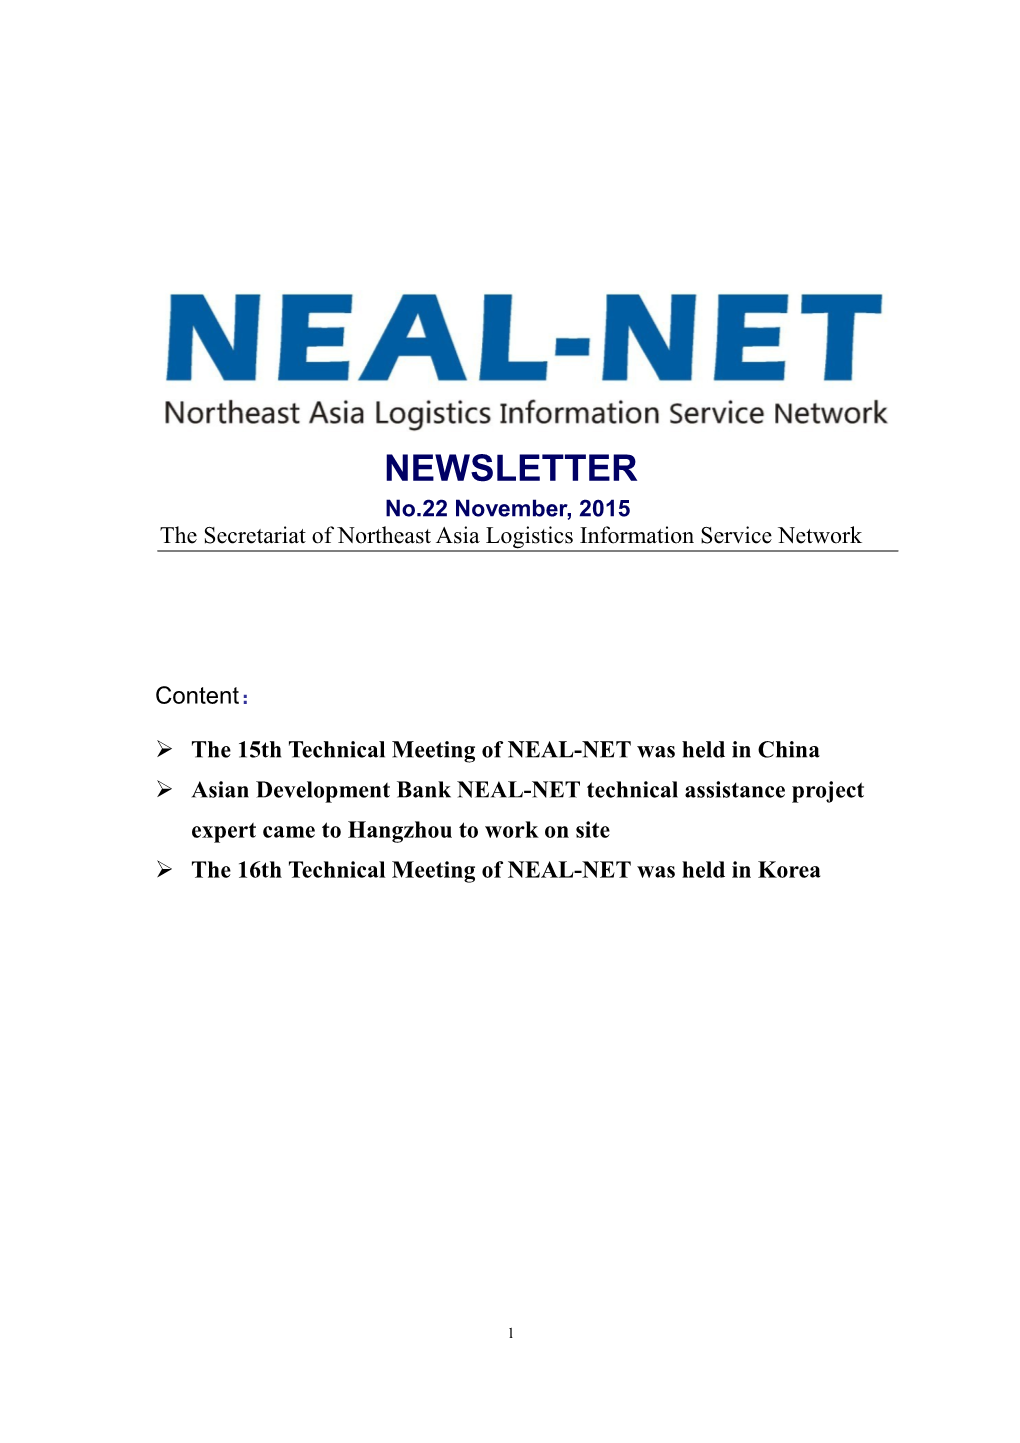 The Secretariat of Northeast Asia Logistics Information Service Network